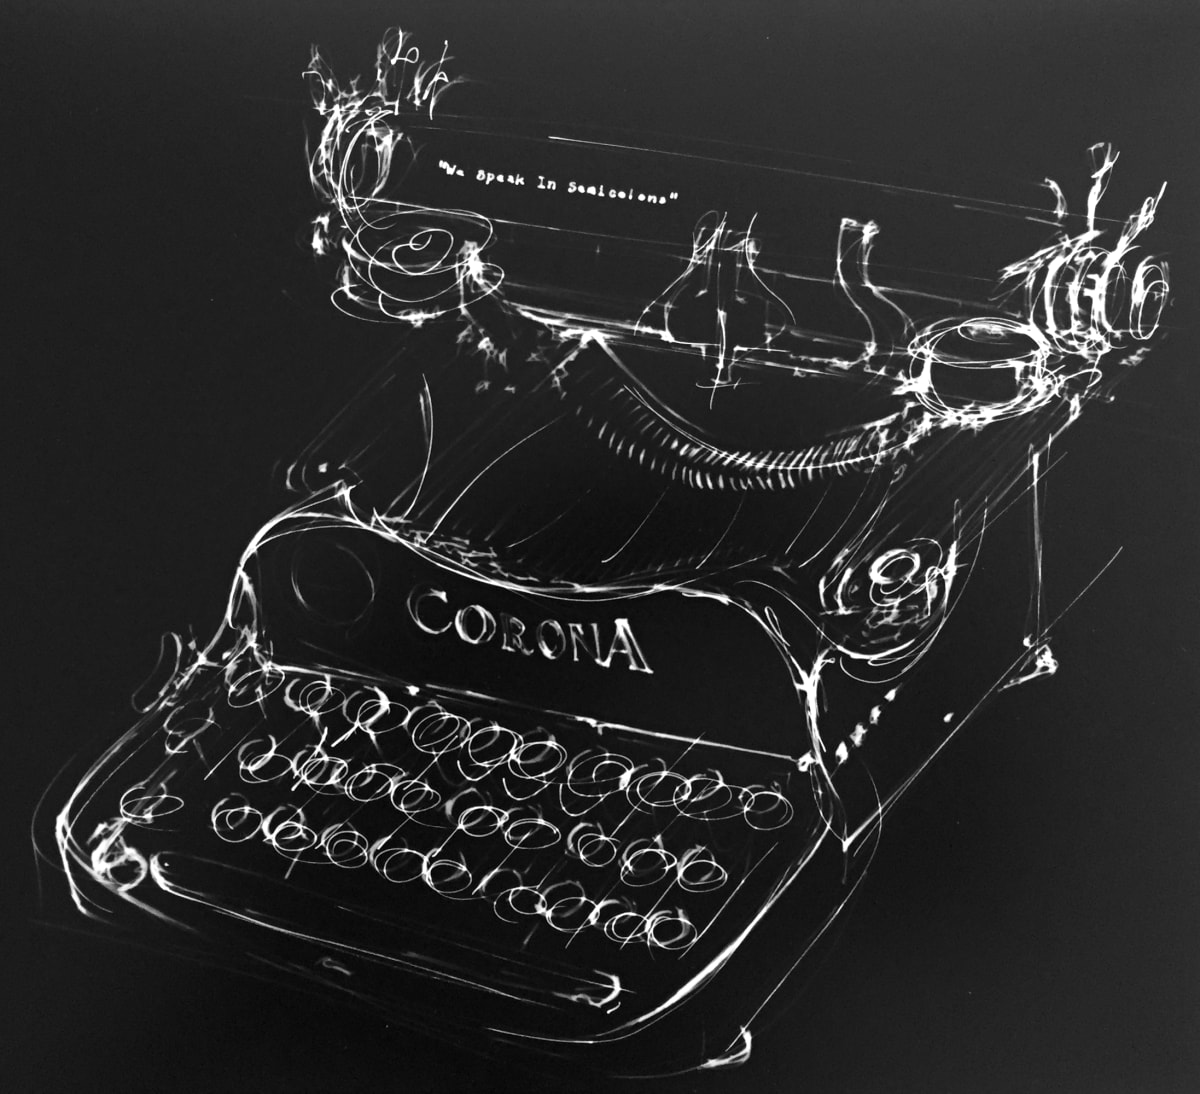 We Speak In Semicolons / Typewriter 1/50 by Helen Dennis 